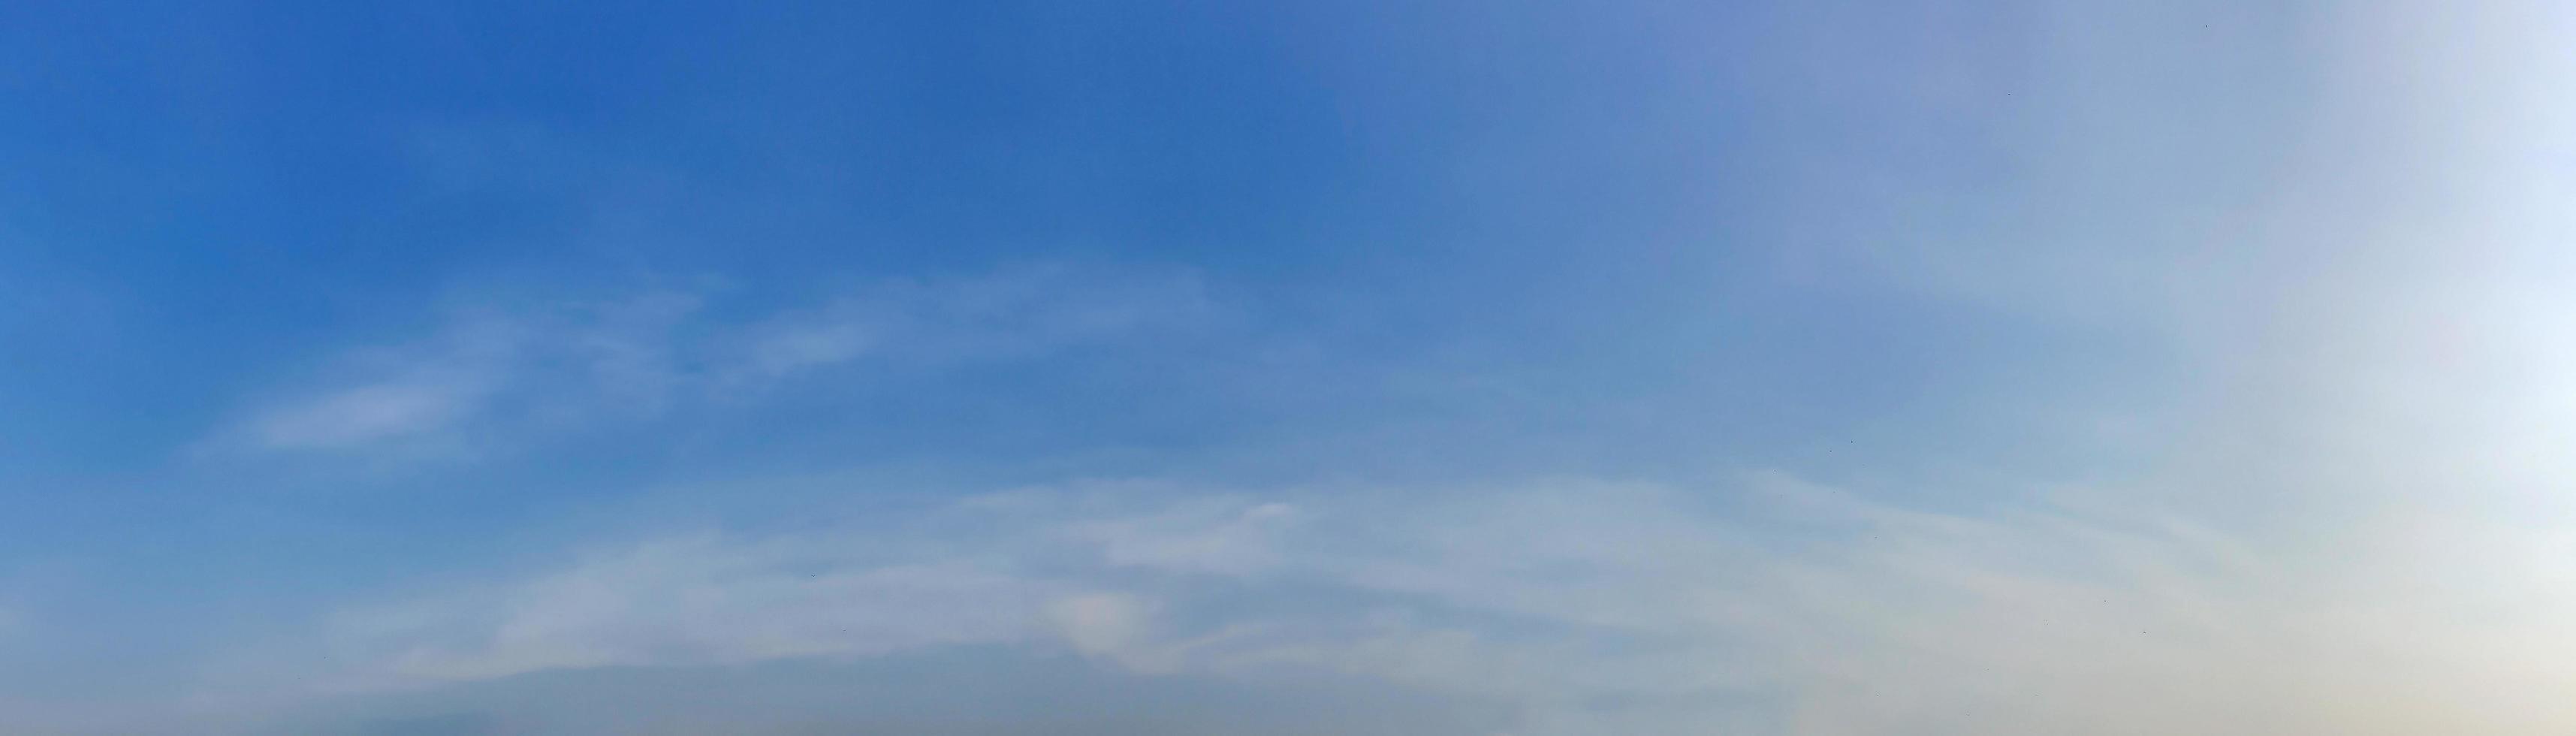 panoramahimmel med moln på en solig dag. foto